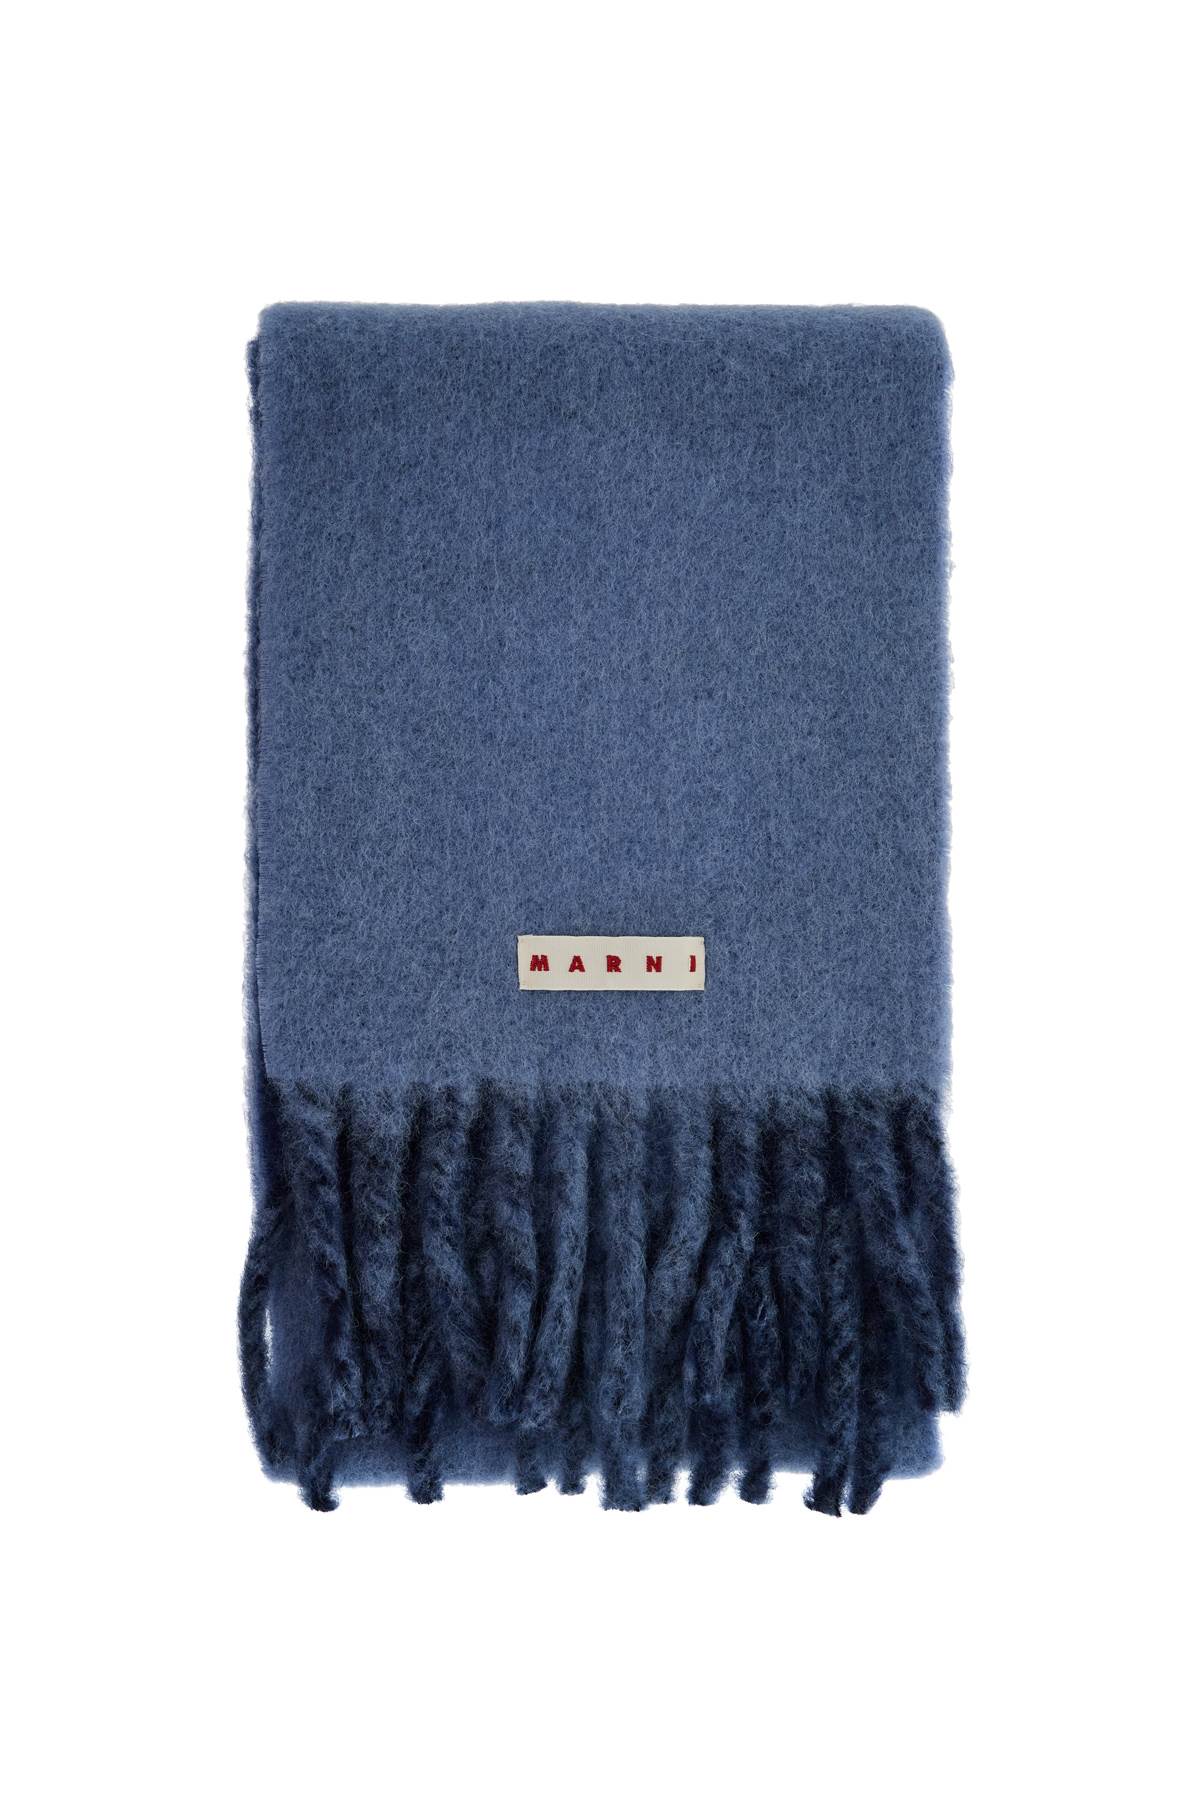 Marni MARNI wool and mohair scarf with maxi logo